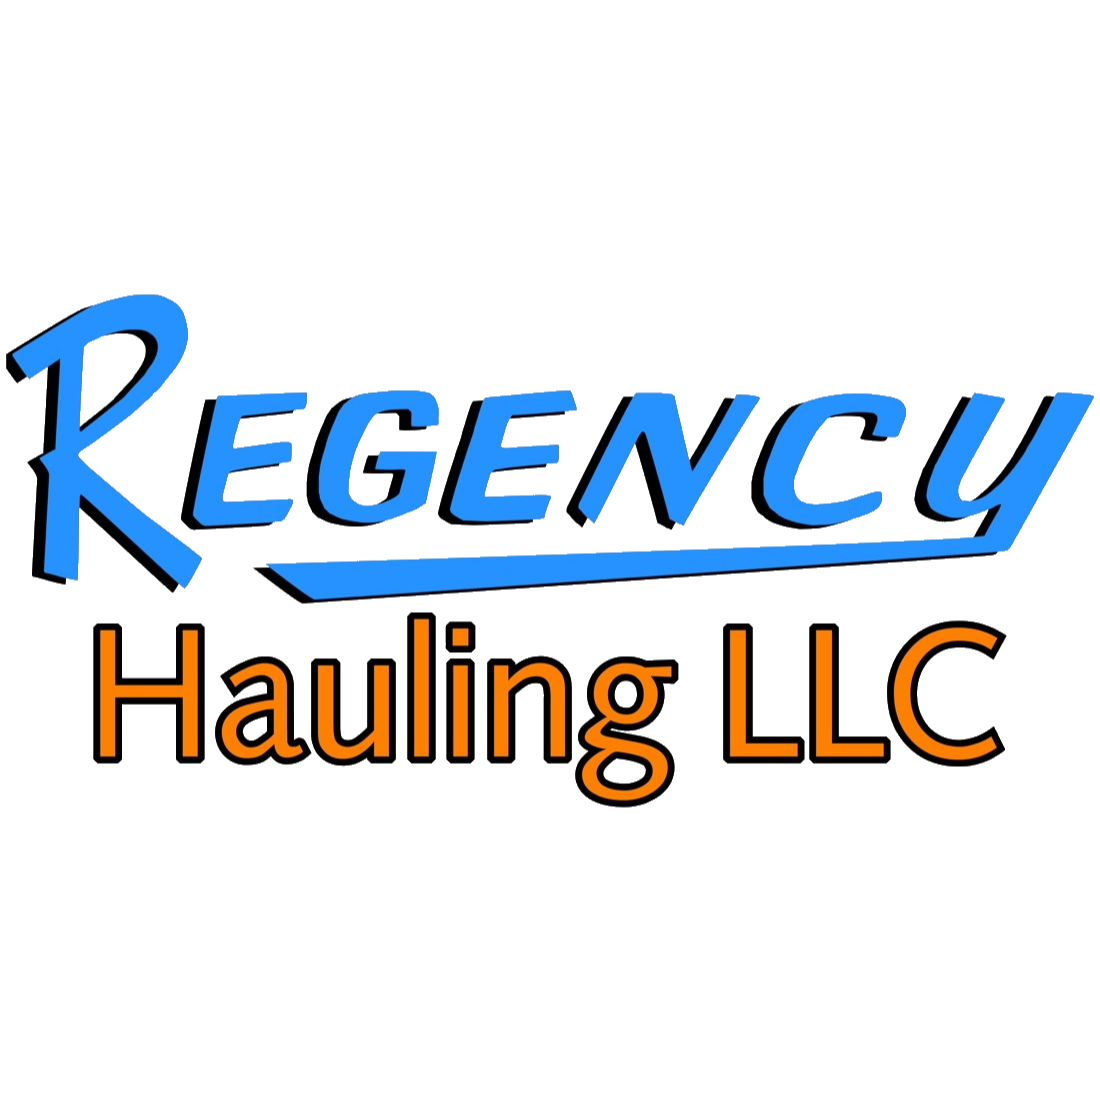 Regency Hauling - Charlotte, NC 28269 - (704)385-5173 | ShowMeLocal.com